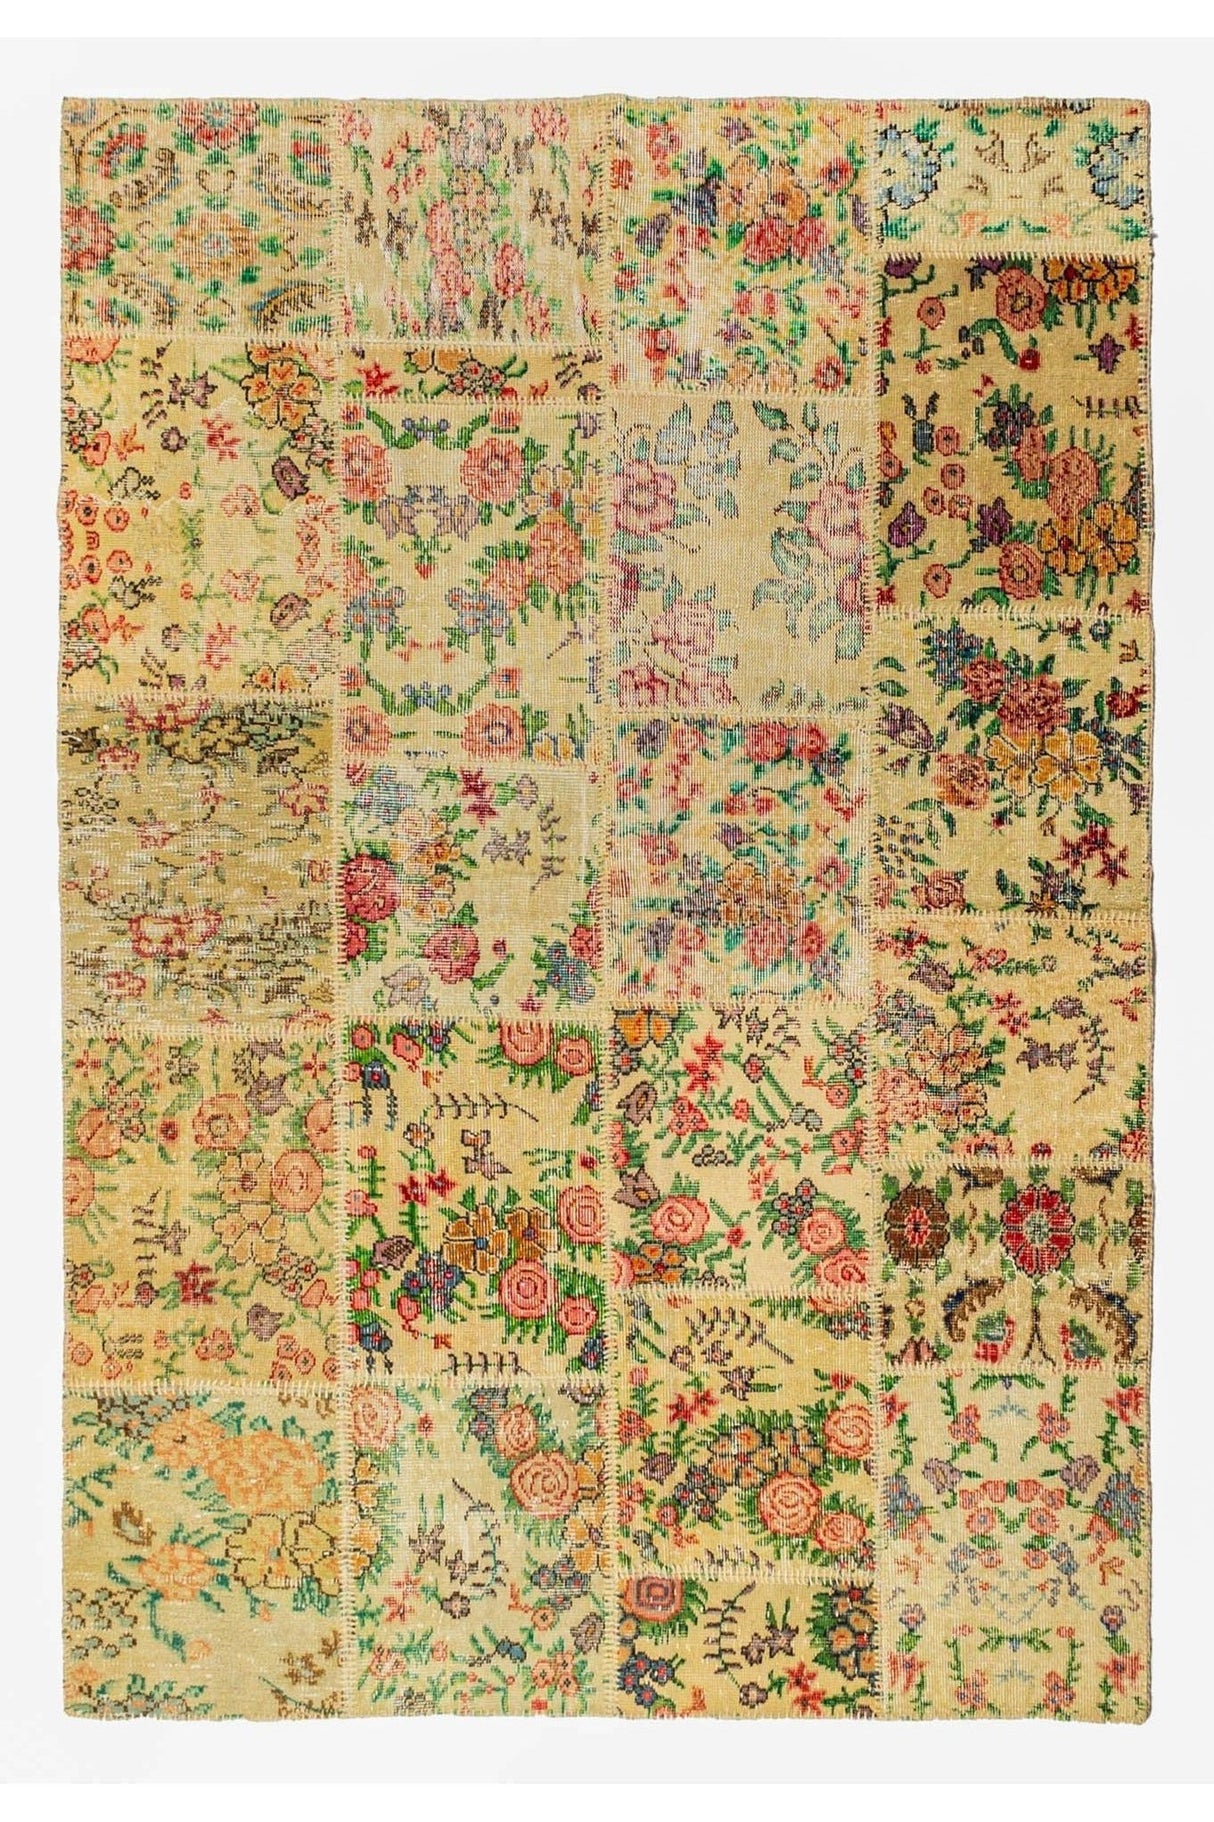 #Turkish_Carpets_Rugs# #Modern_Carpets# #Abrash_Carpets#Abrash-28-241X165